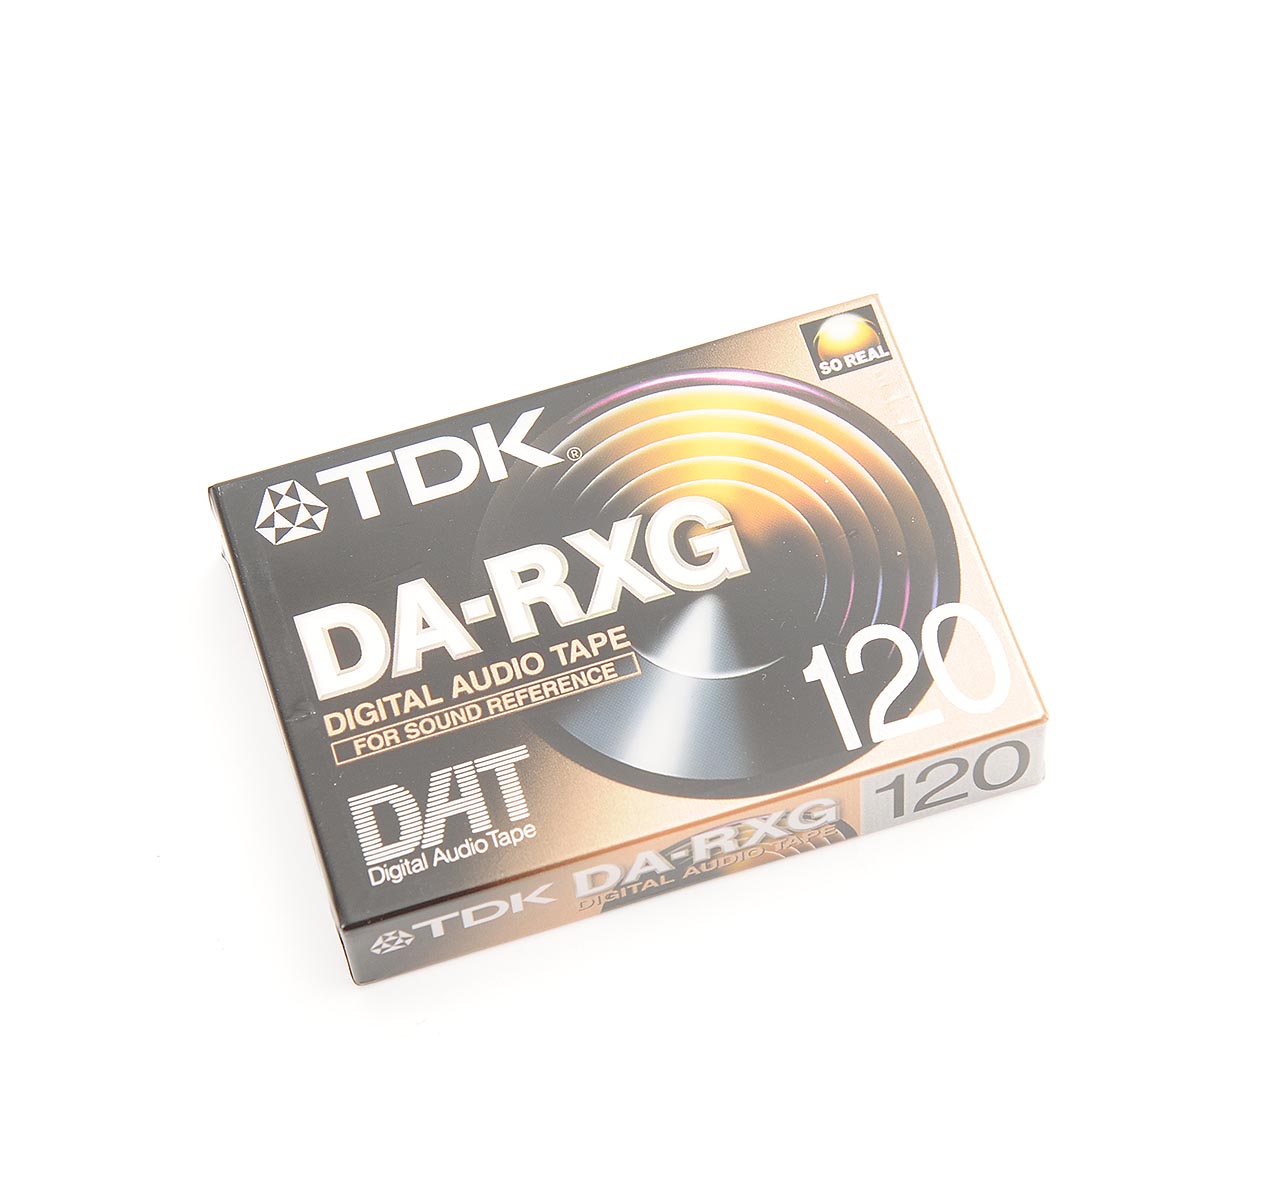 NEU TDK DA-RXG 120 DAT Tape 